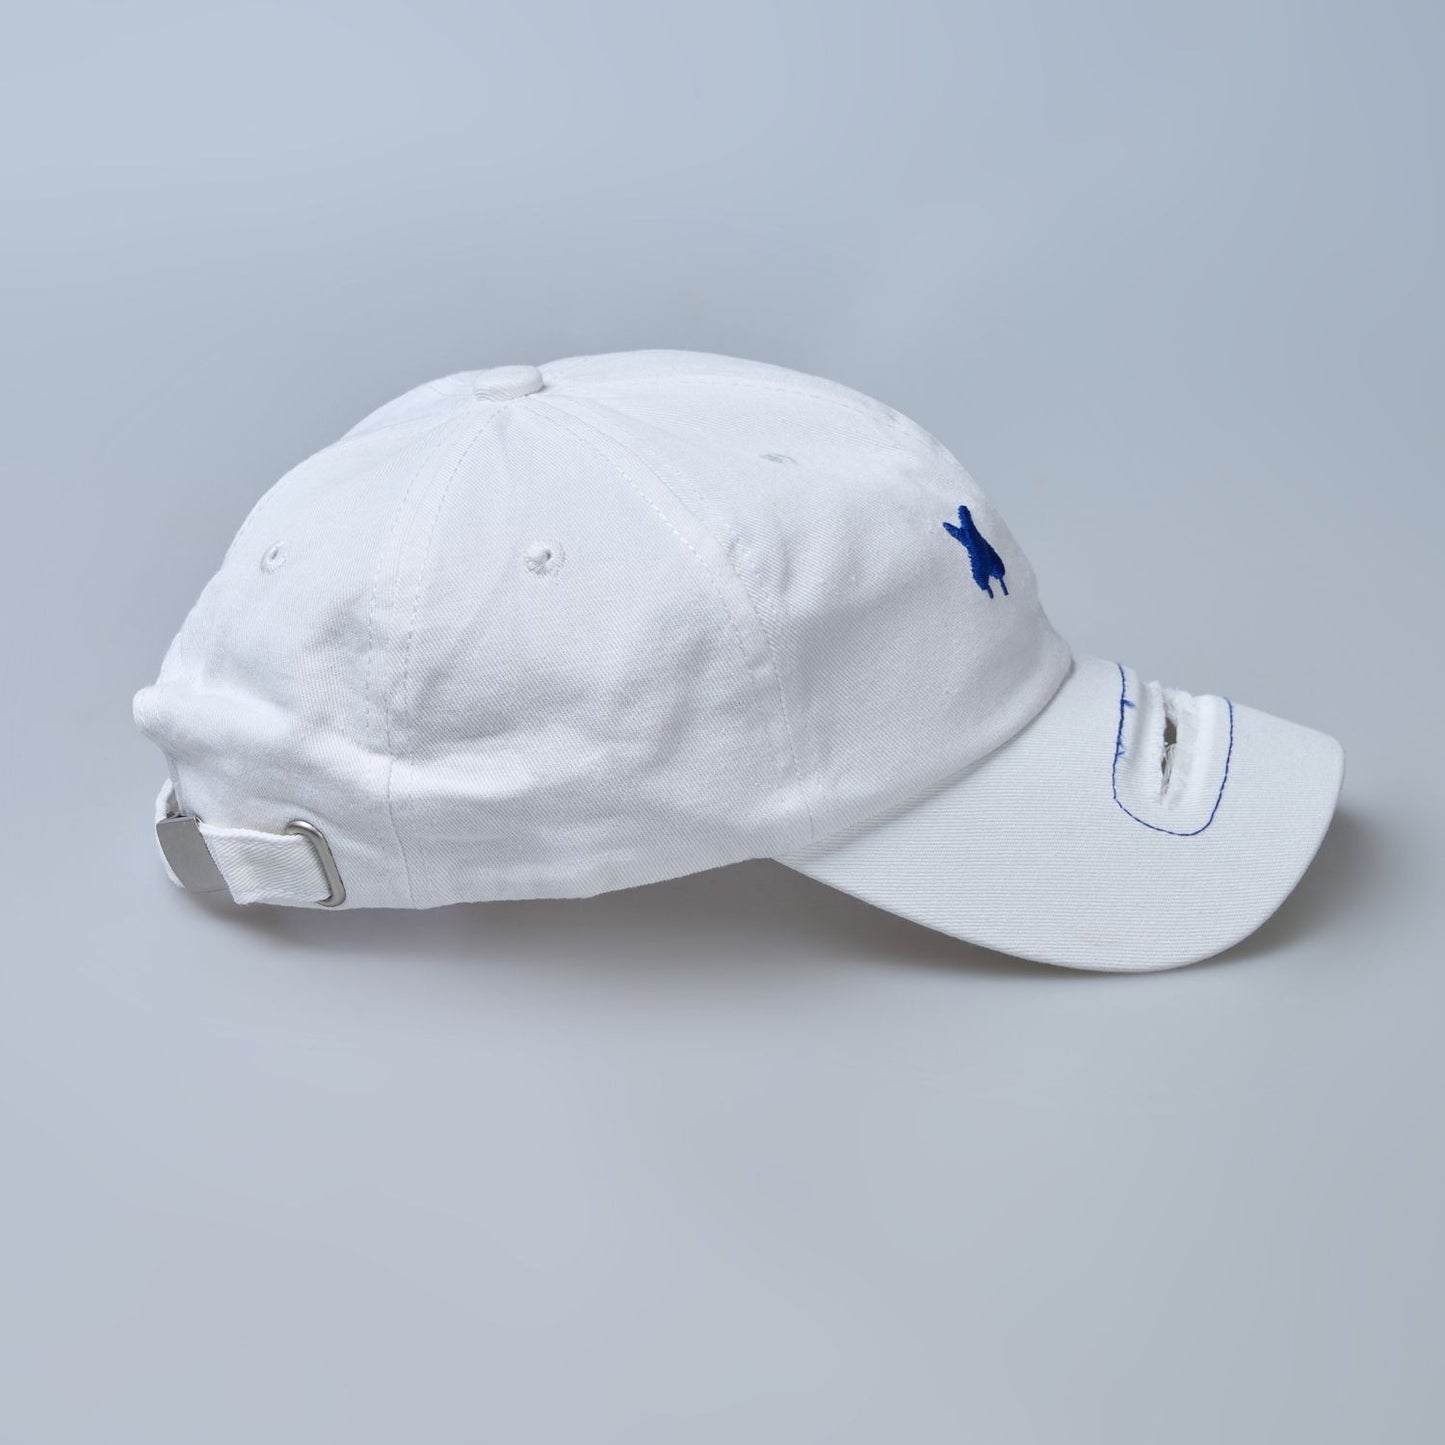 White colored plain cap for men.